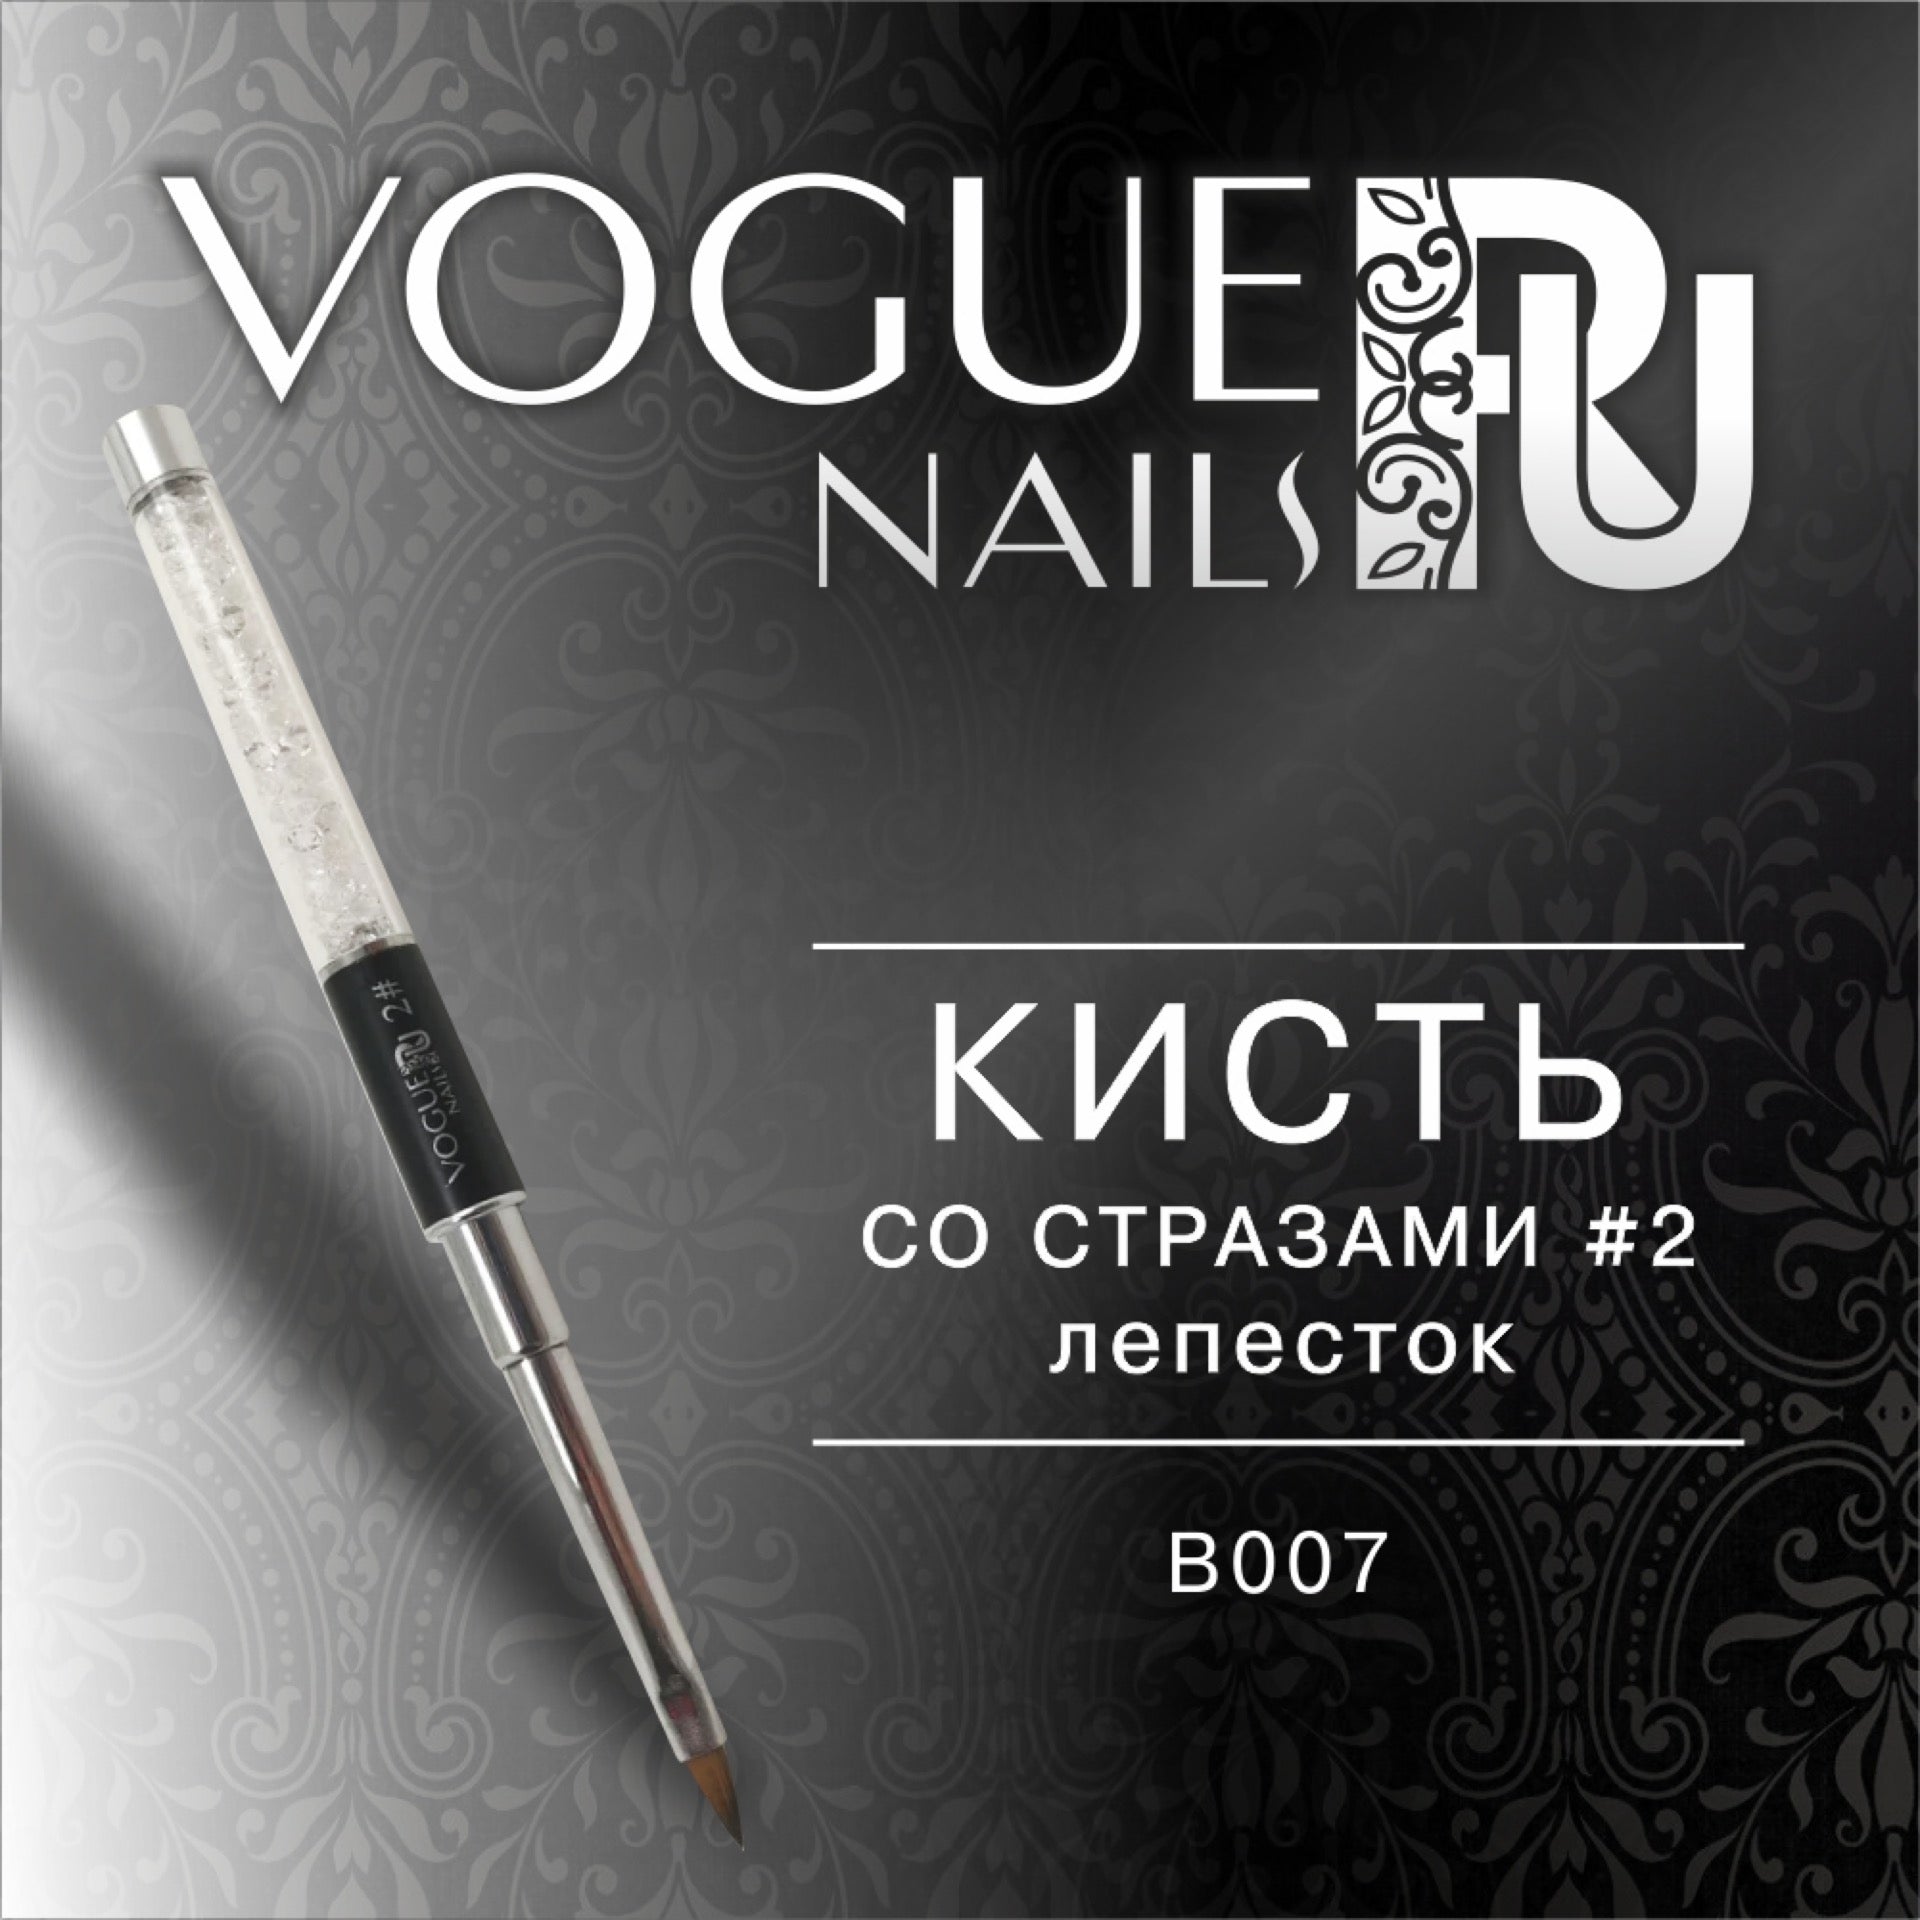 Brush with Rhinestones #2 Petal Vogue Nails